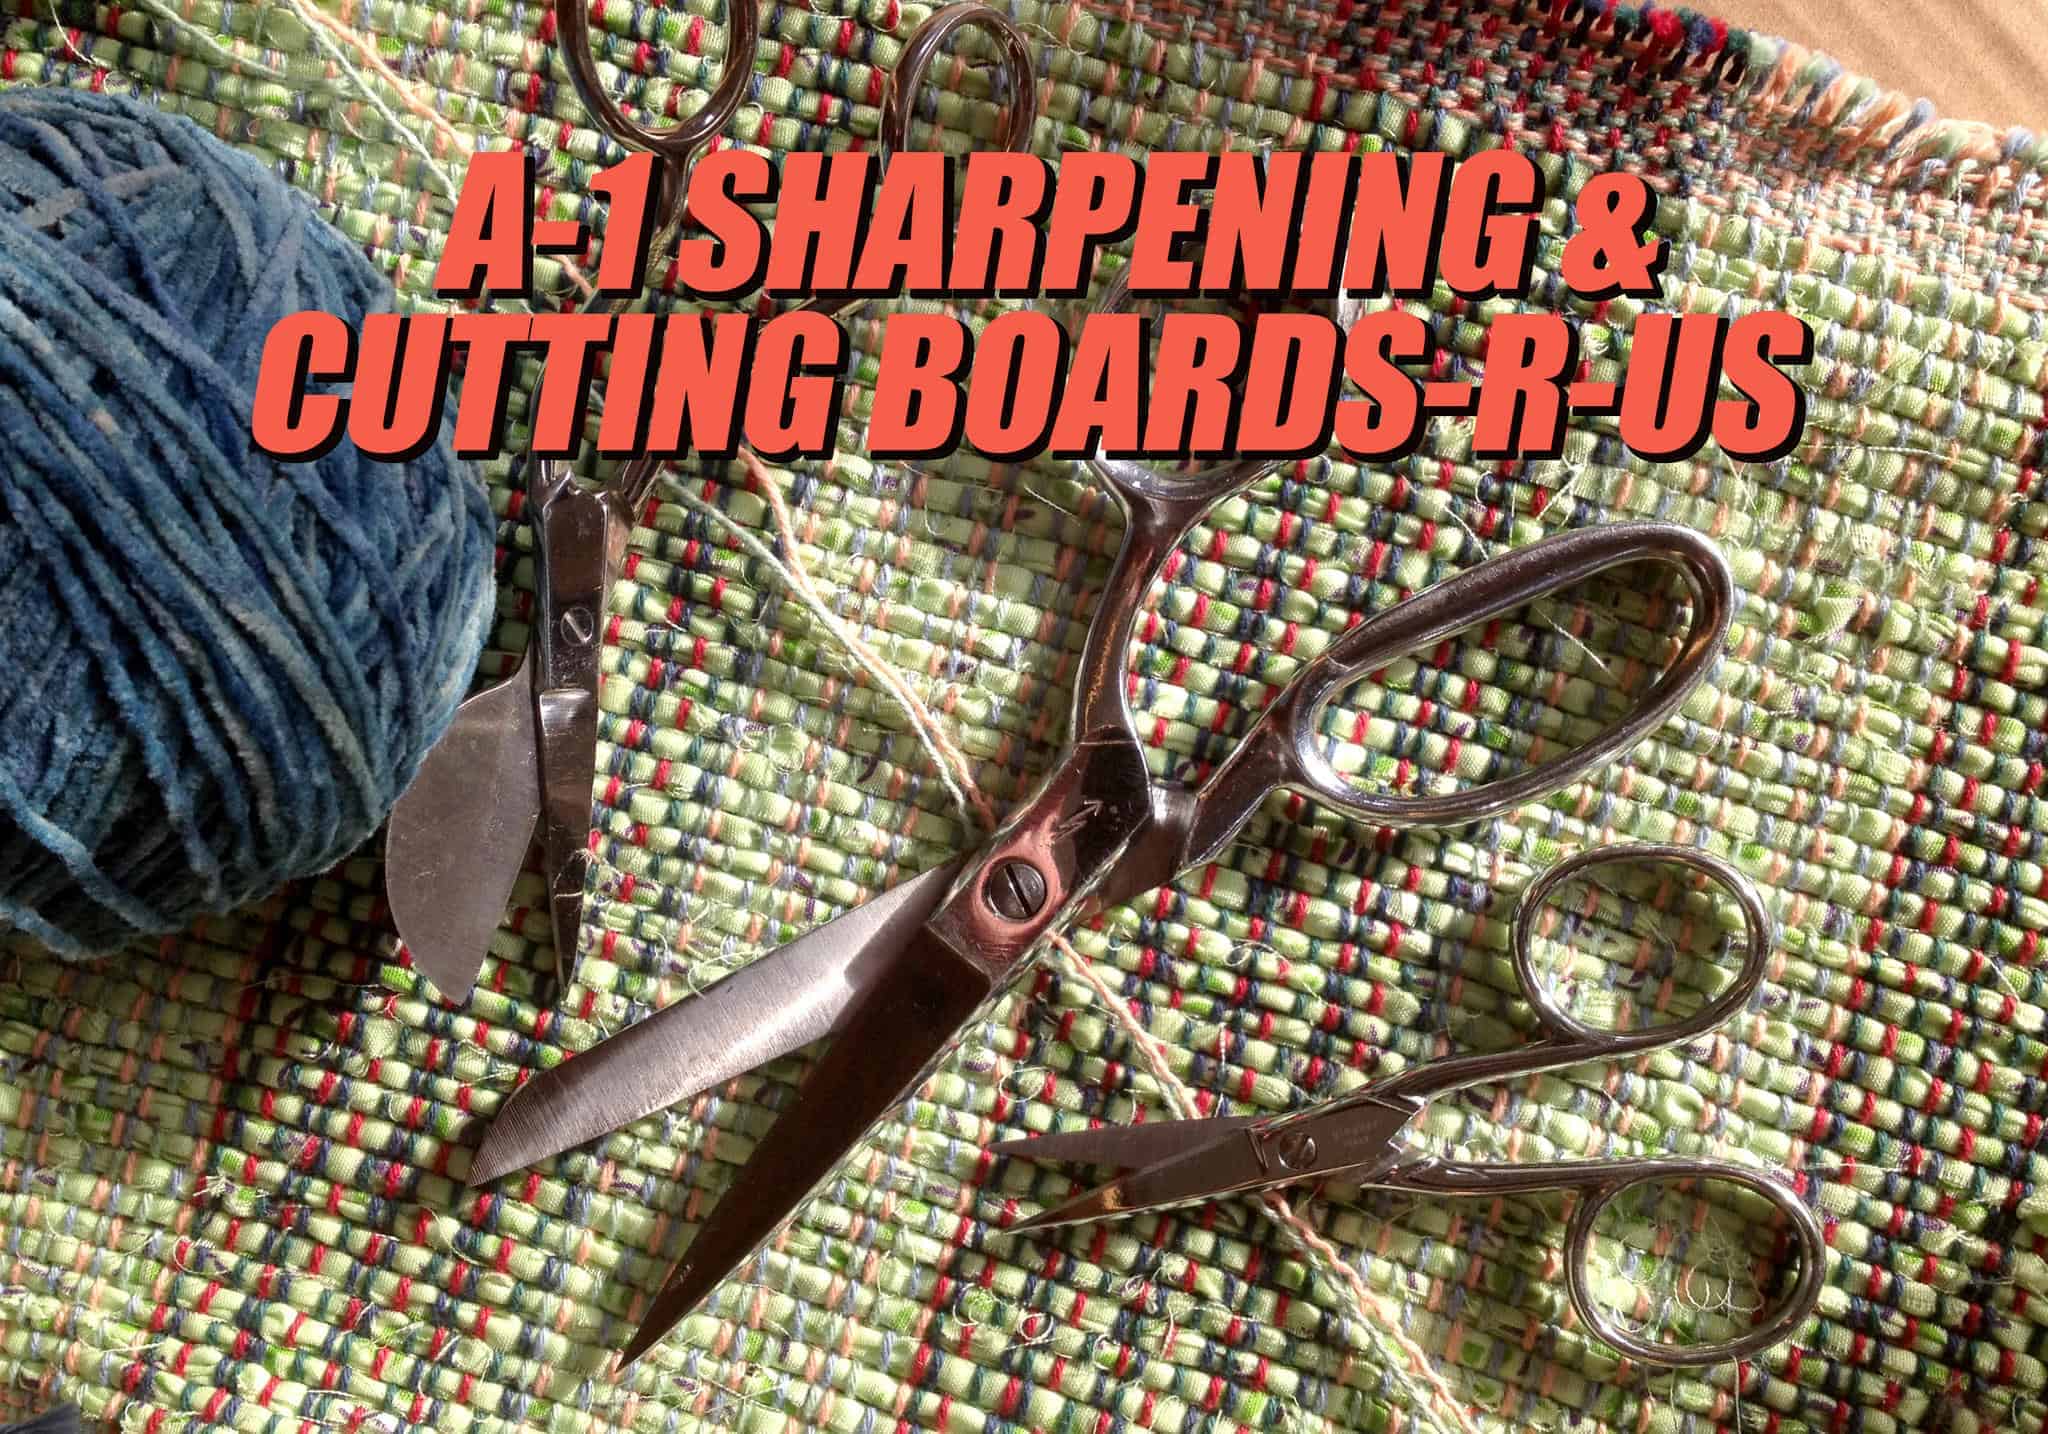 A-1 Sharpening & Cutting Boards-R-Us Logo